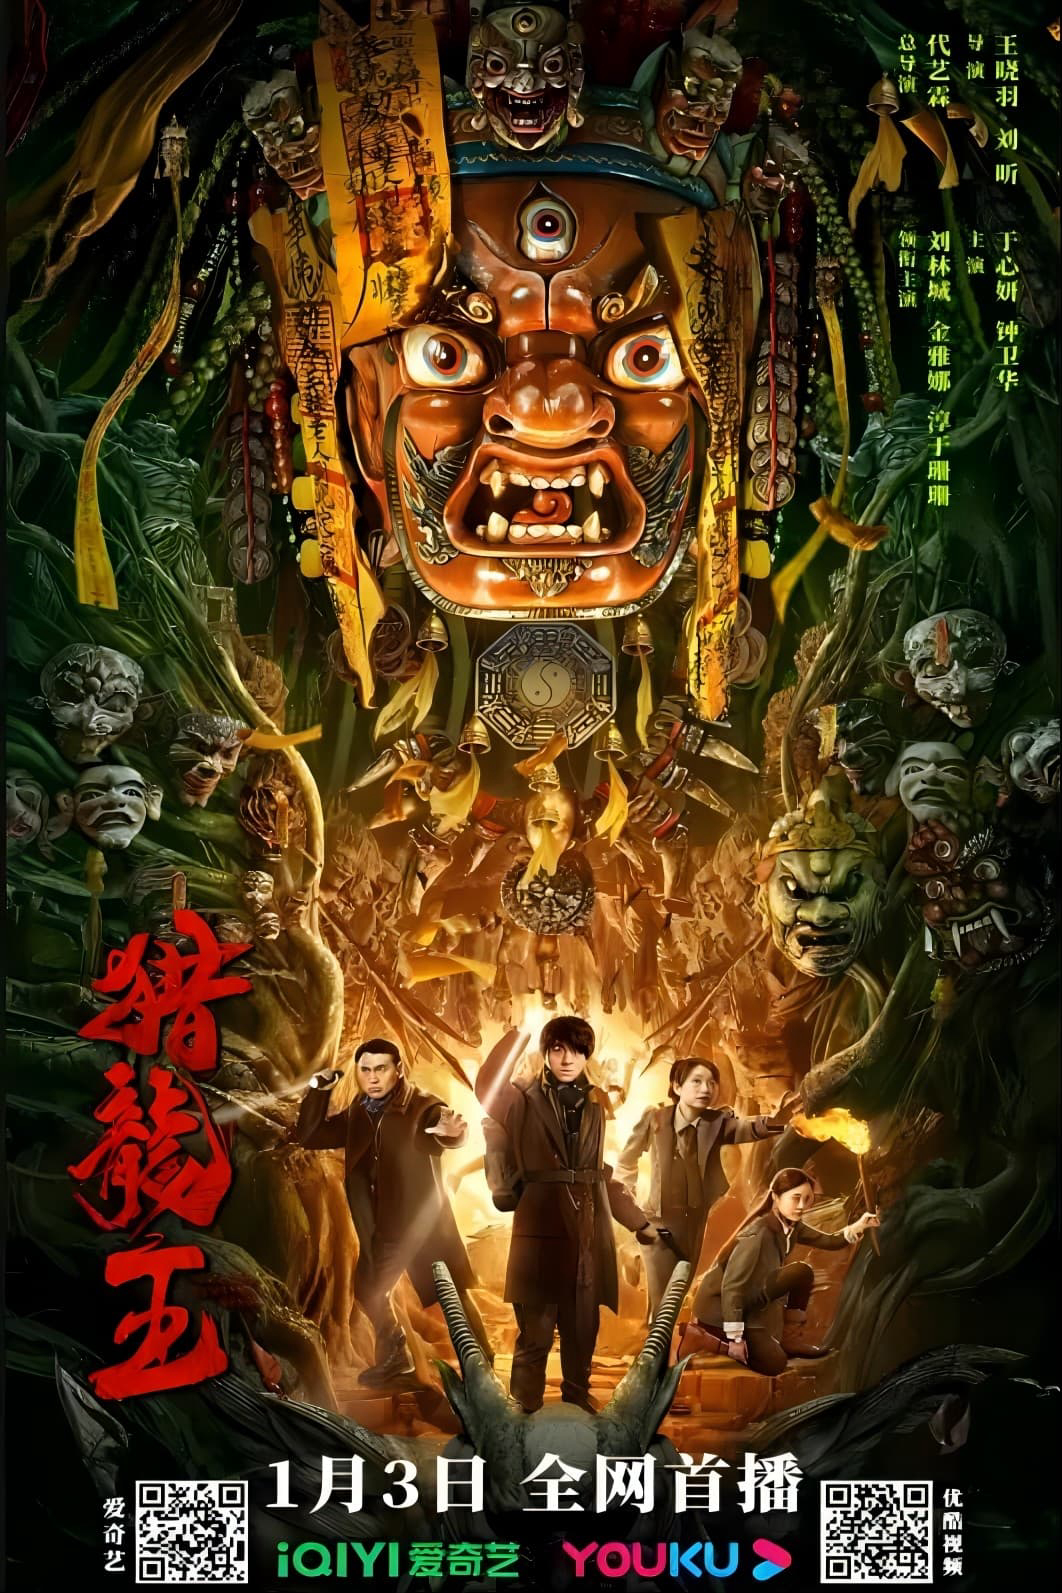 Poster Phim Vua Săn Rồng (dragon hanting king)